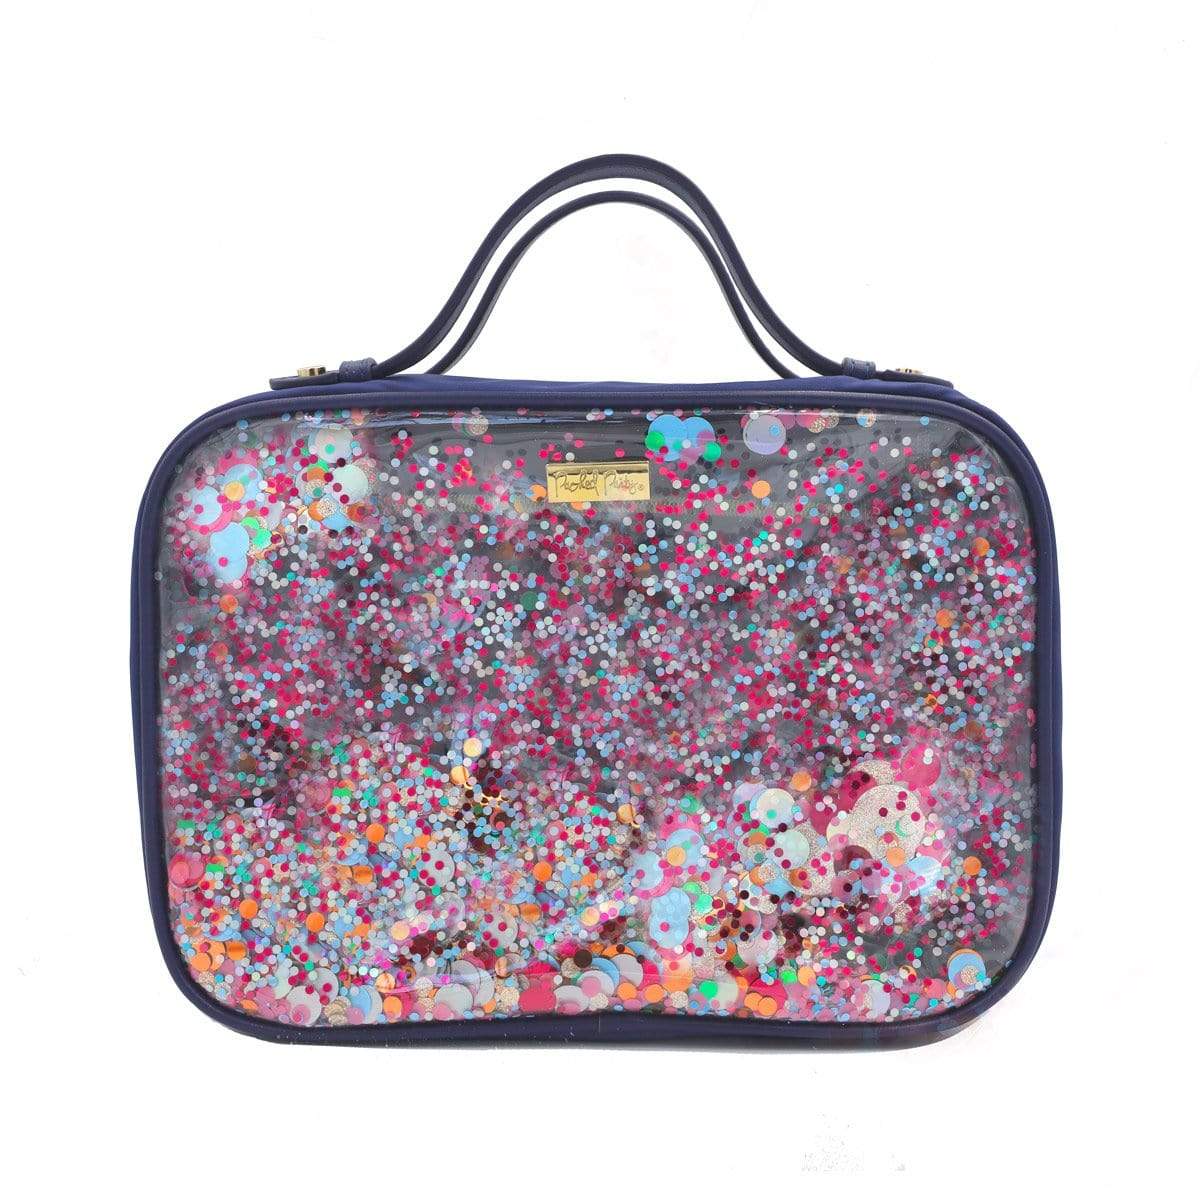 The Essentials Traveler Cosmetic Bag